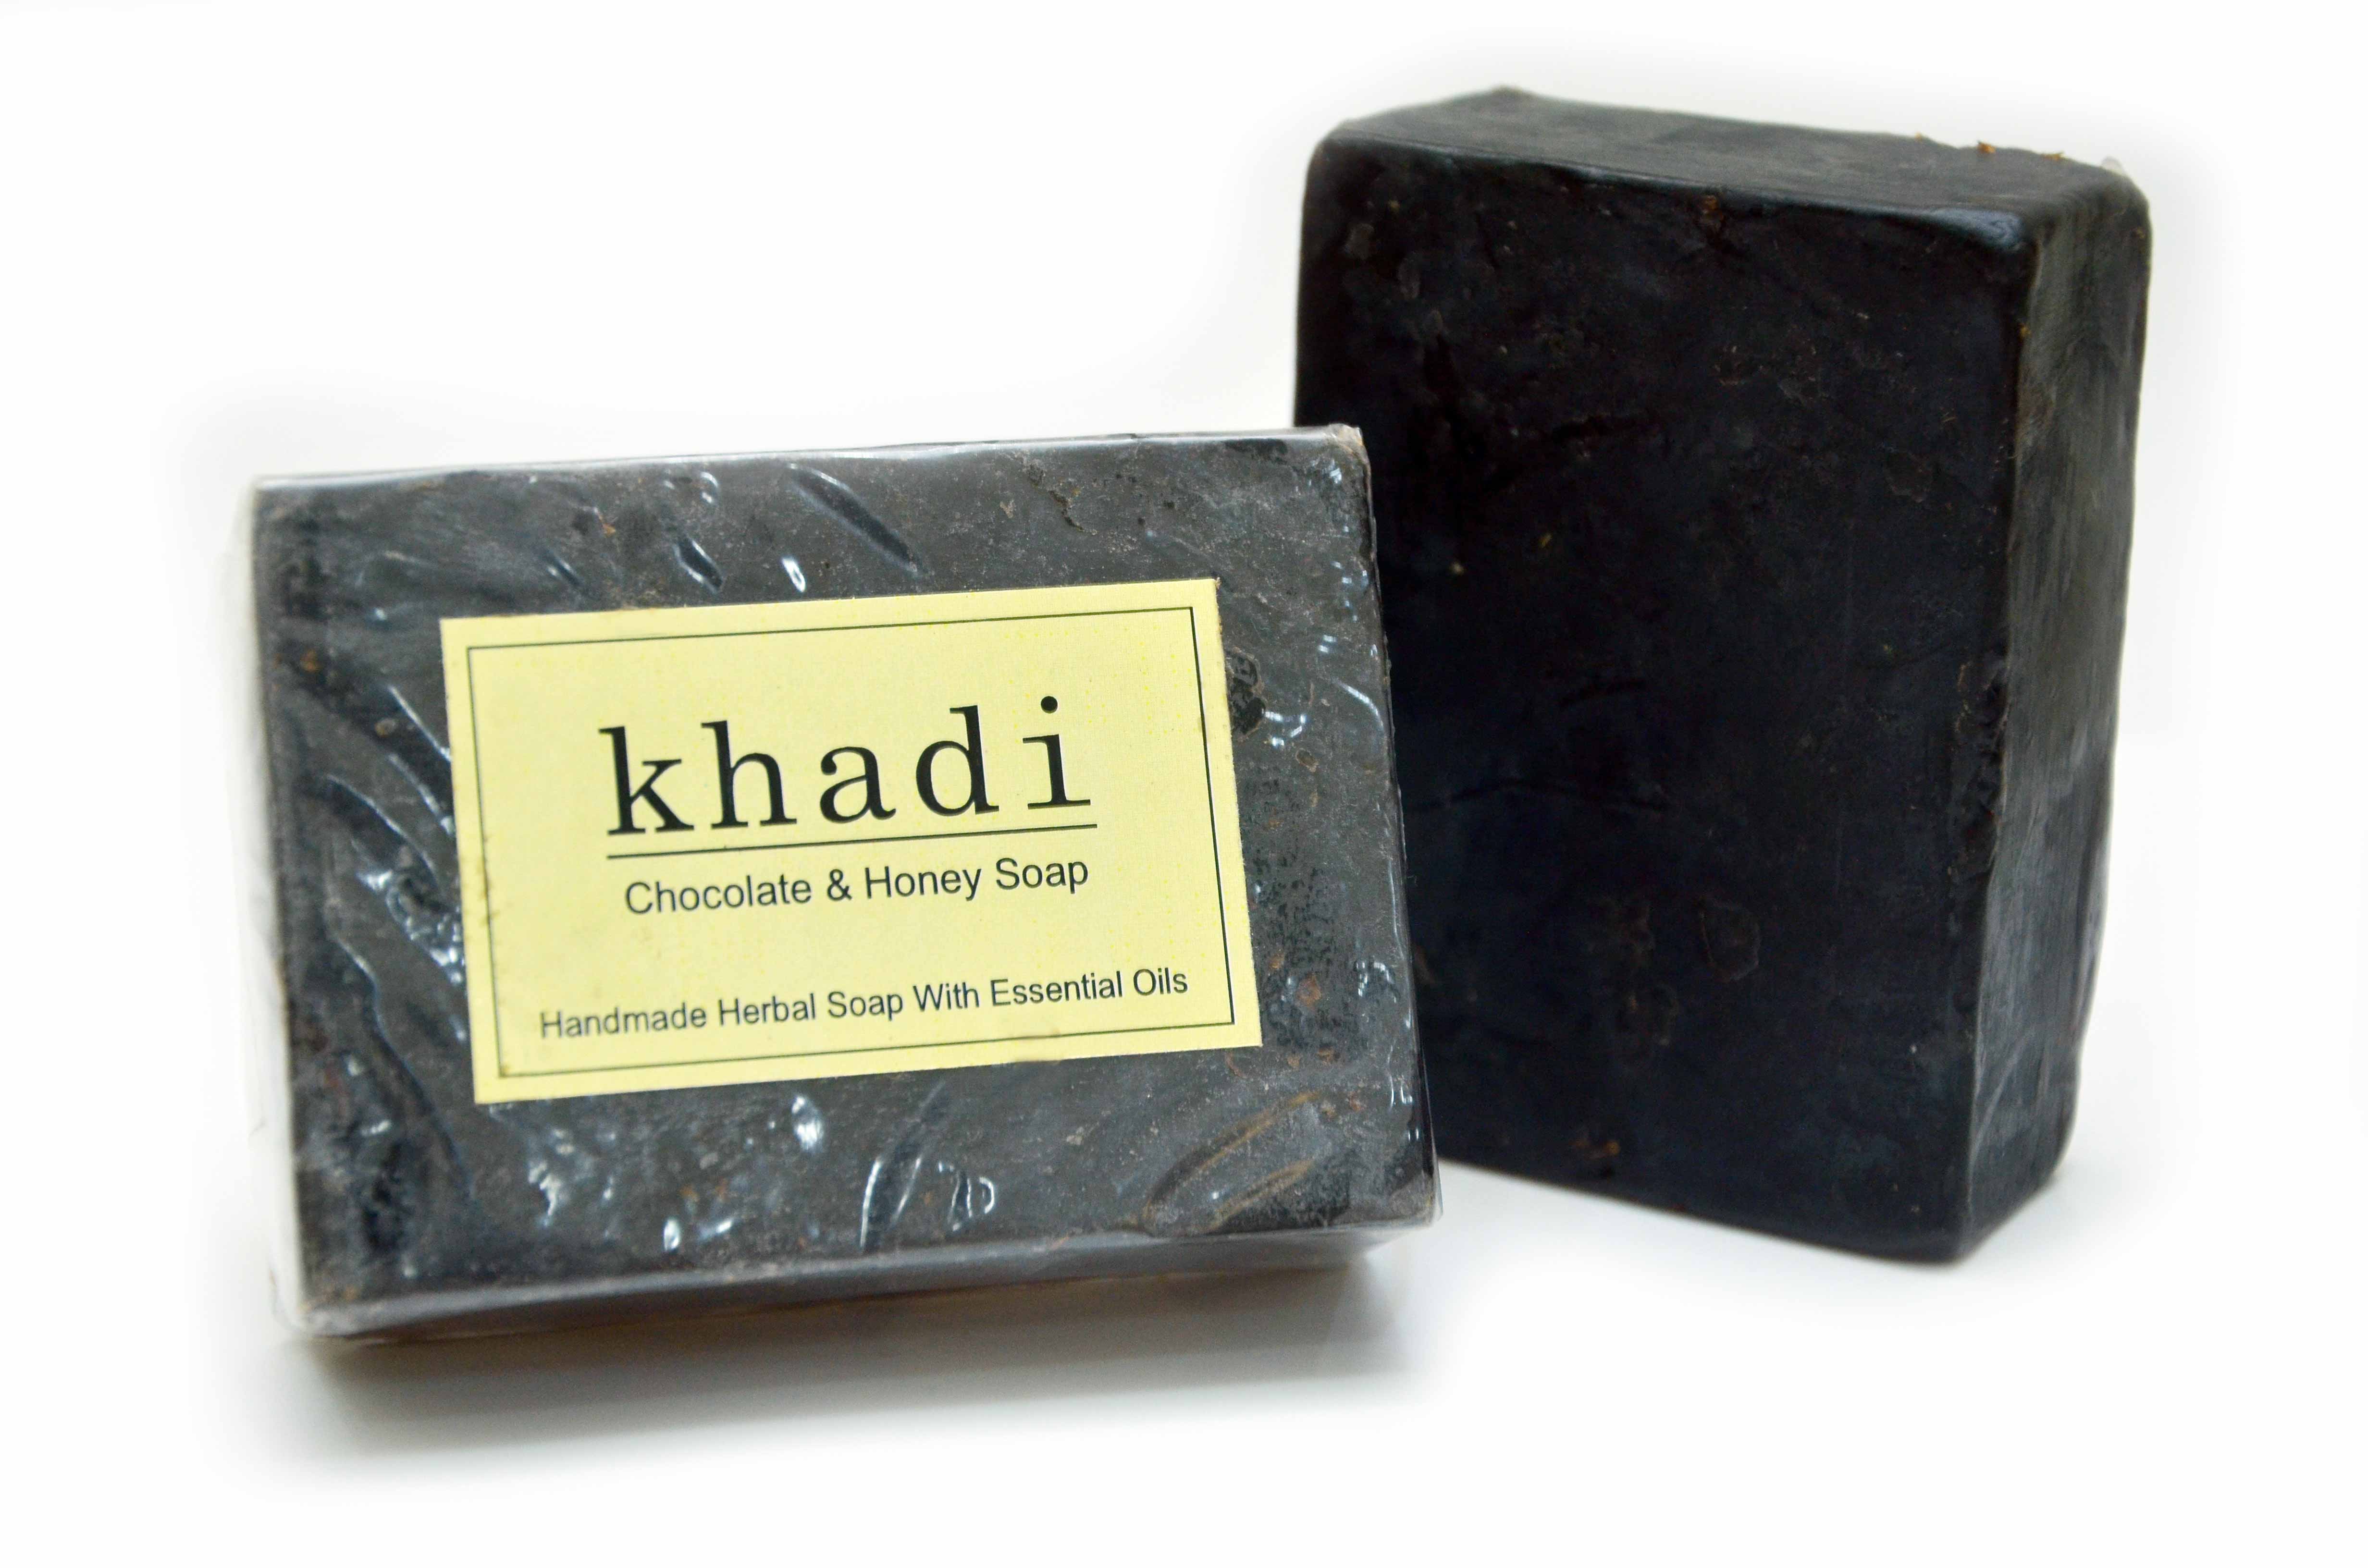 Vagad's Khadi Chocolate And Honey Soap